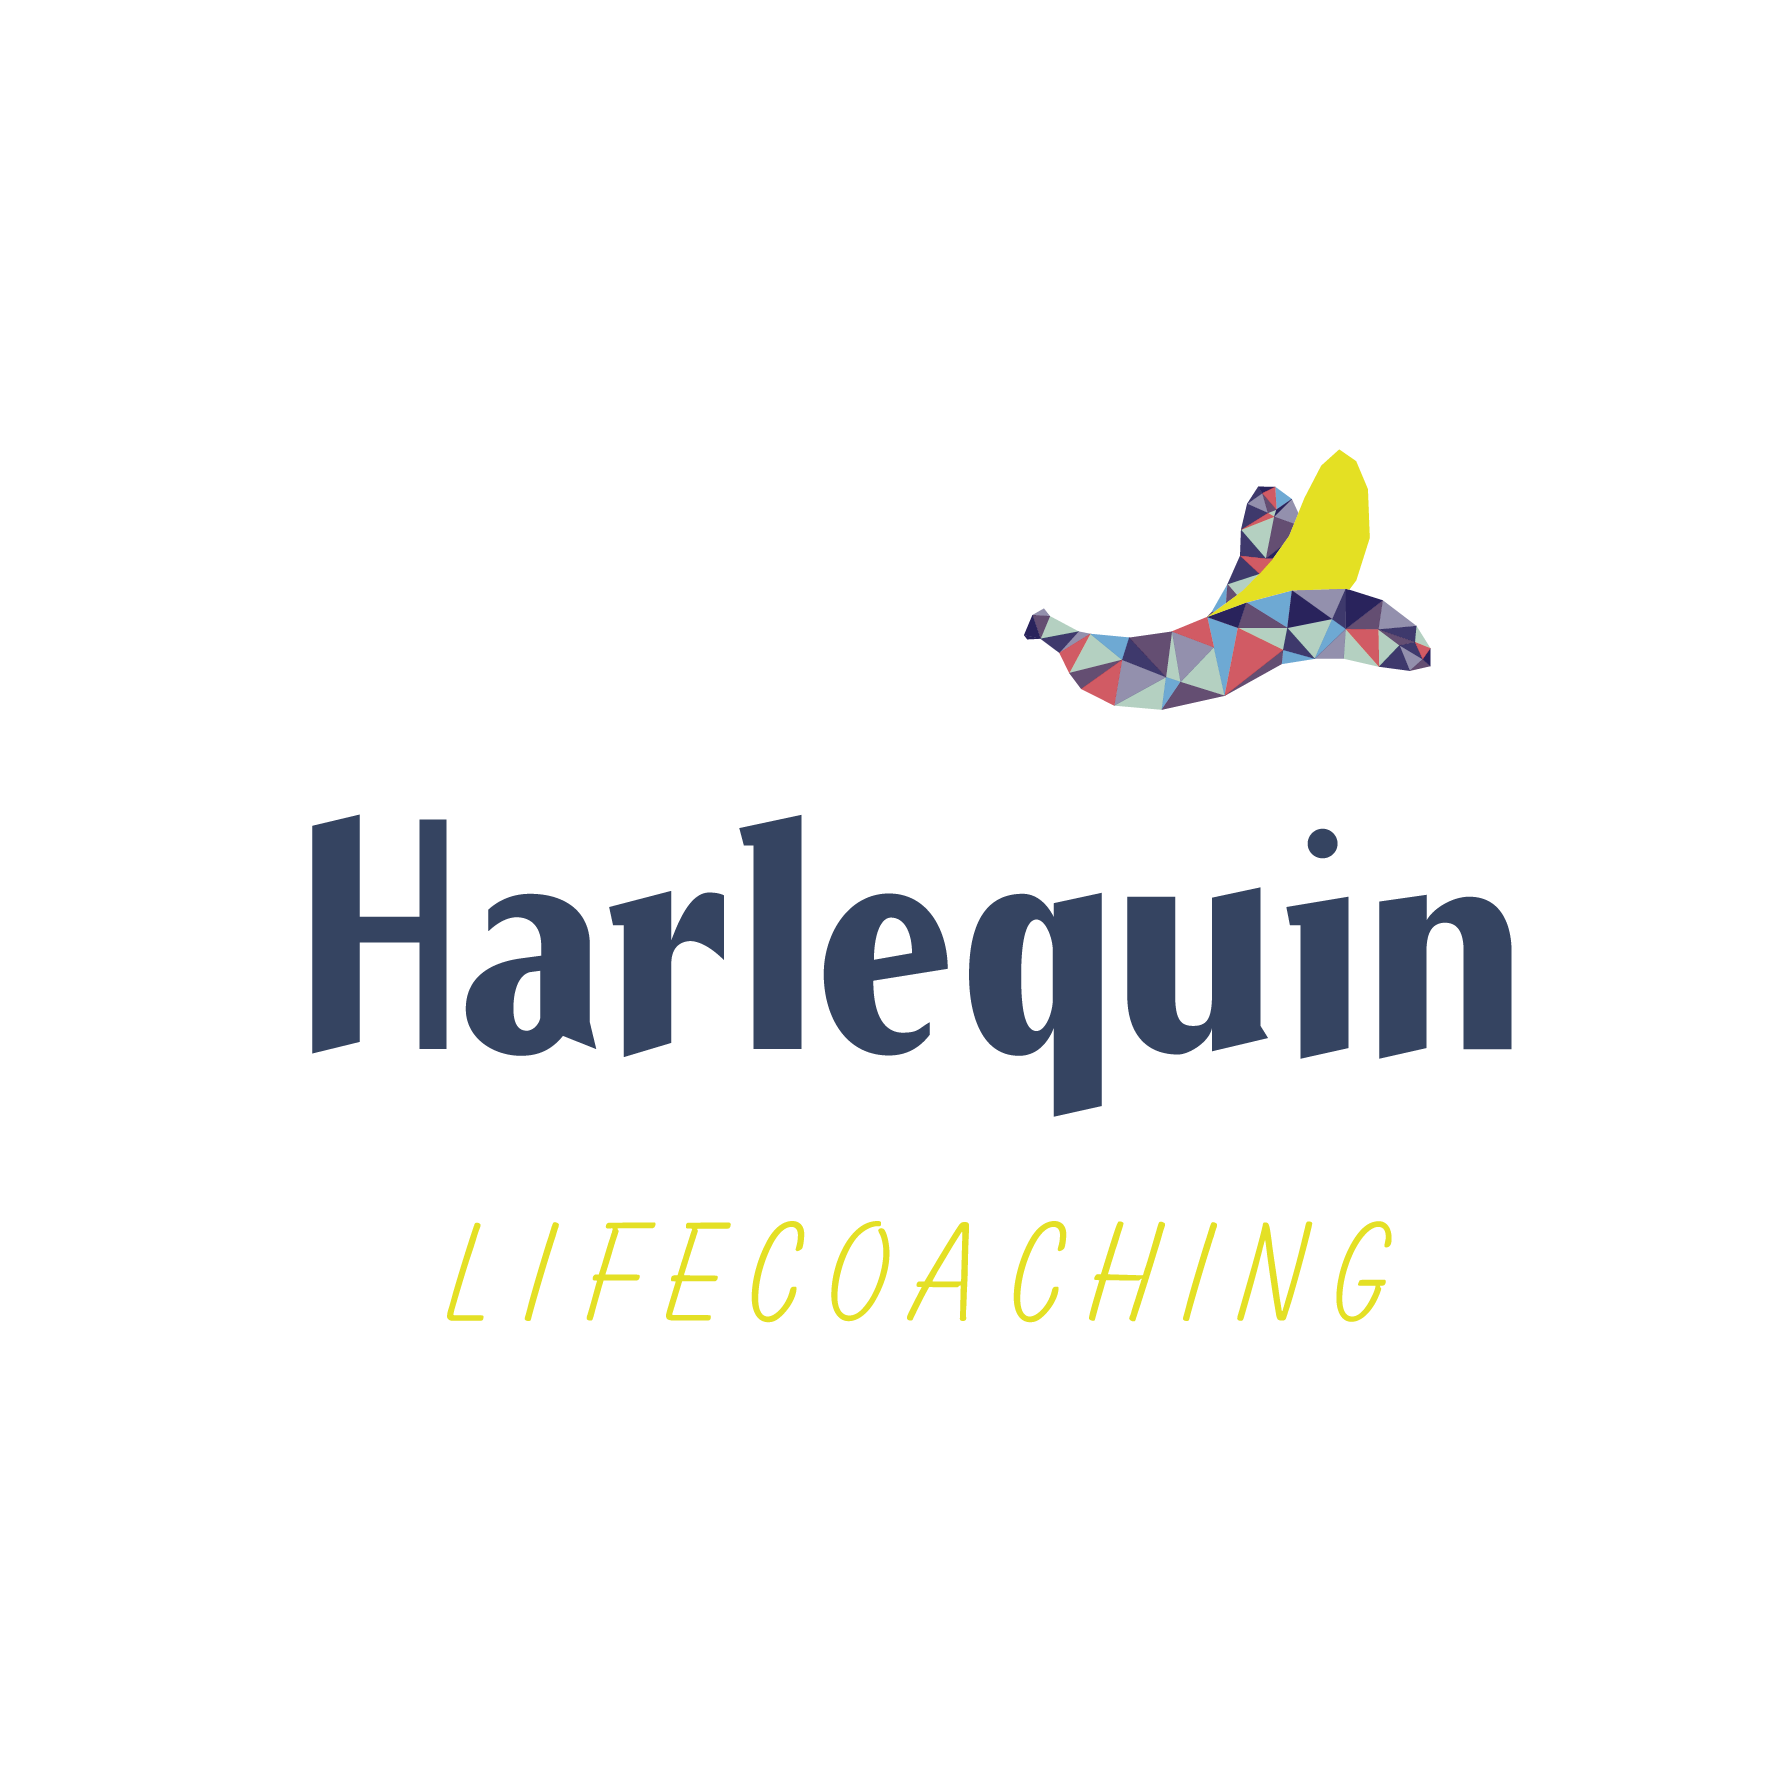 Harlequin-Logosammlung-11.png